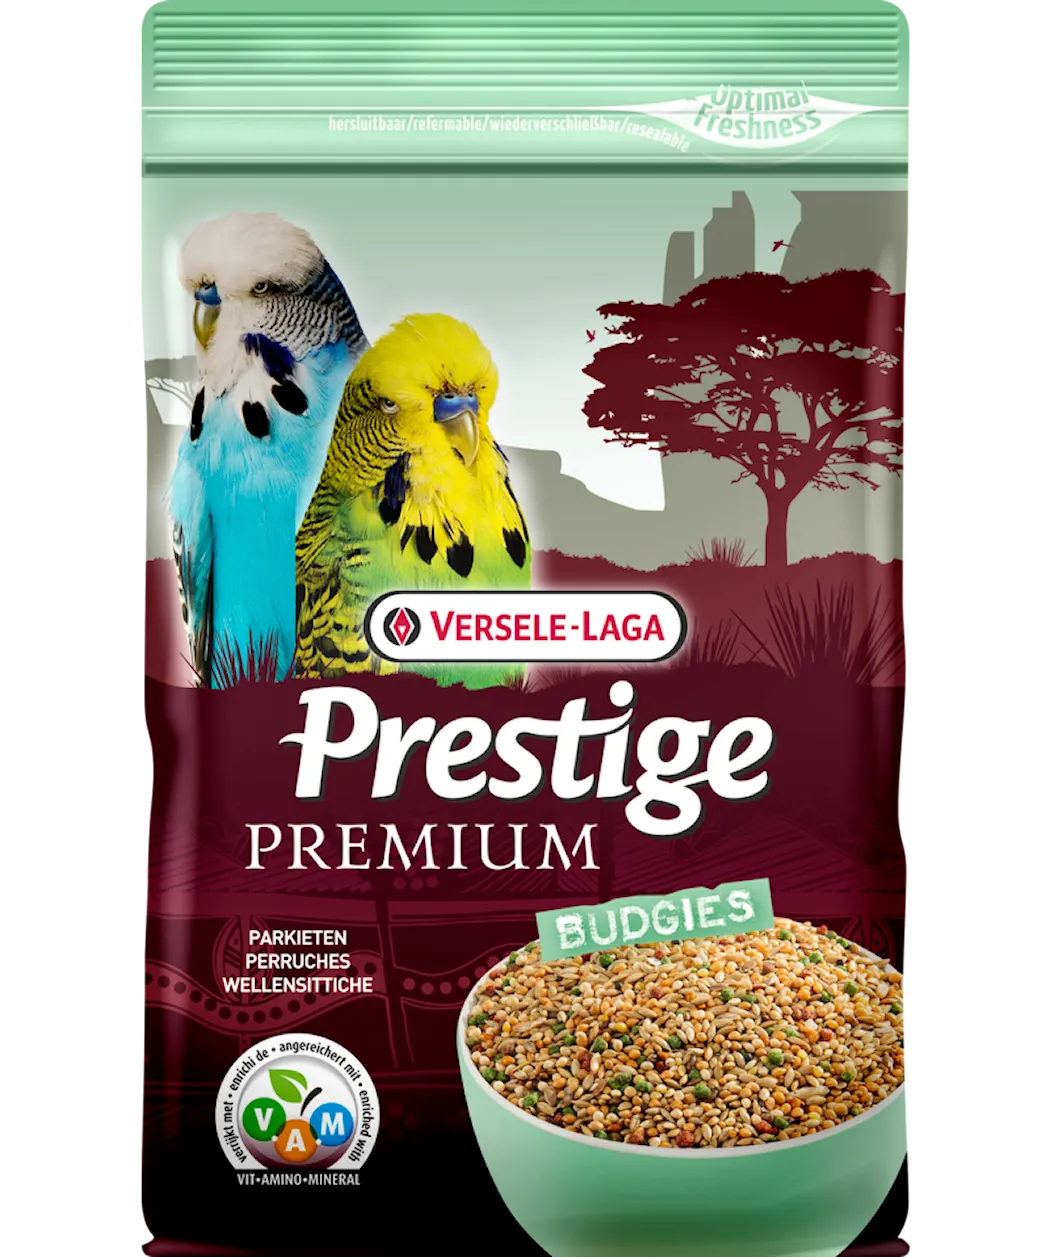 Versele-Laga Prestige Premium Budgie (Undulat)